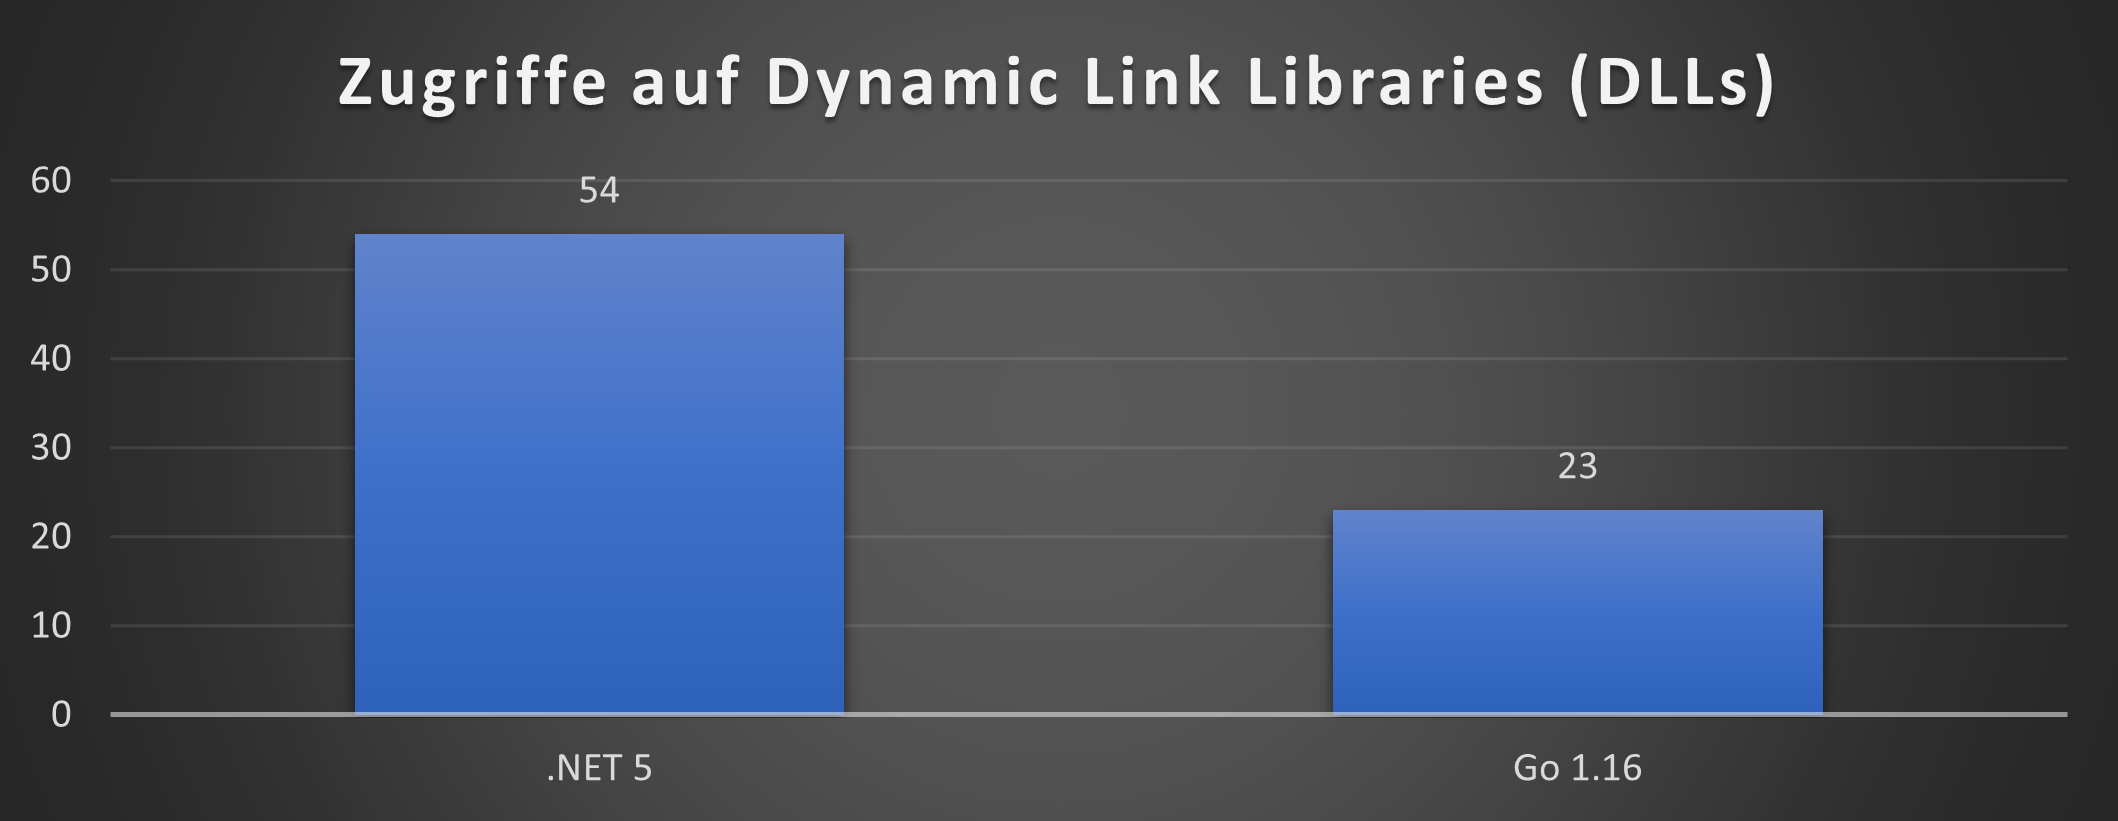 Zugriffe auf Dynamic Link Libraries (DLLs)